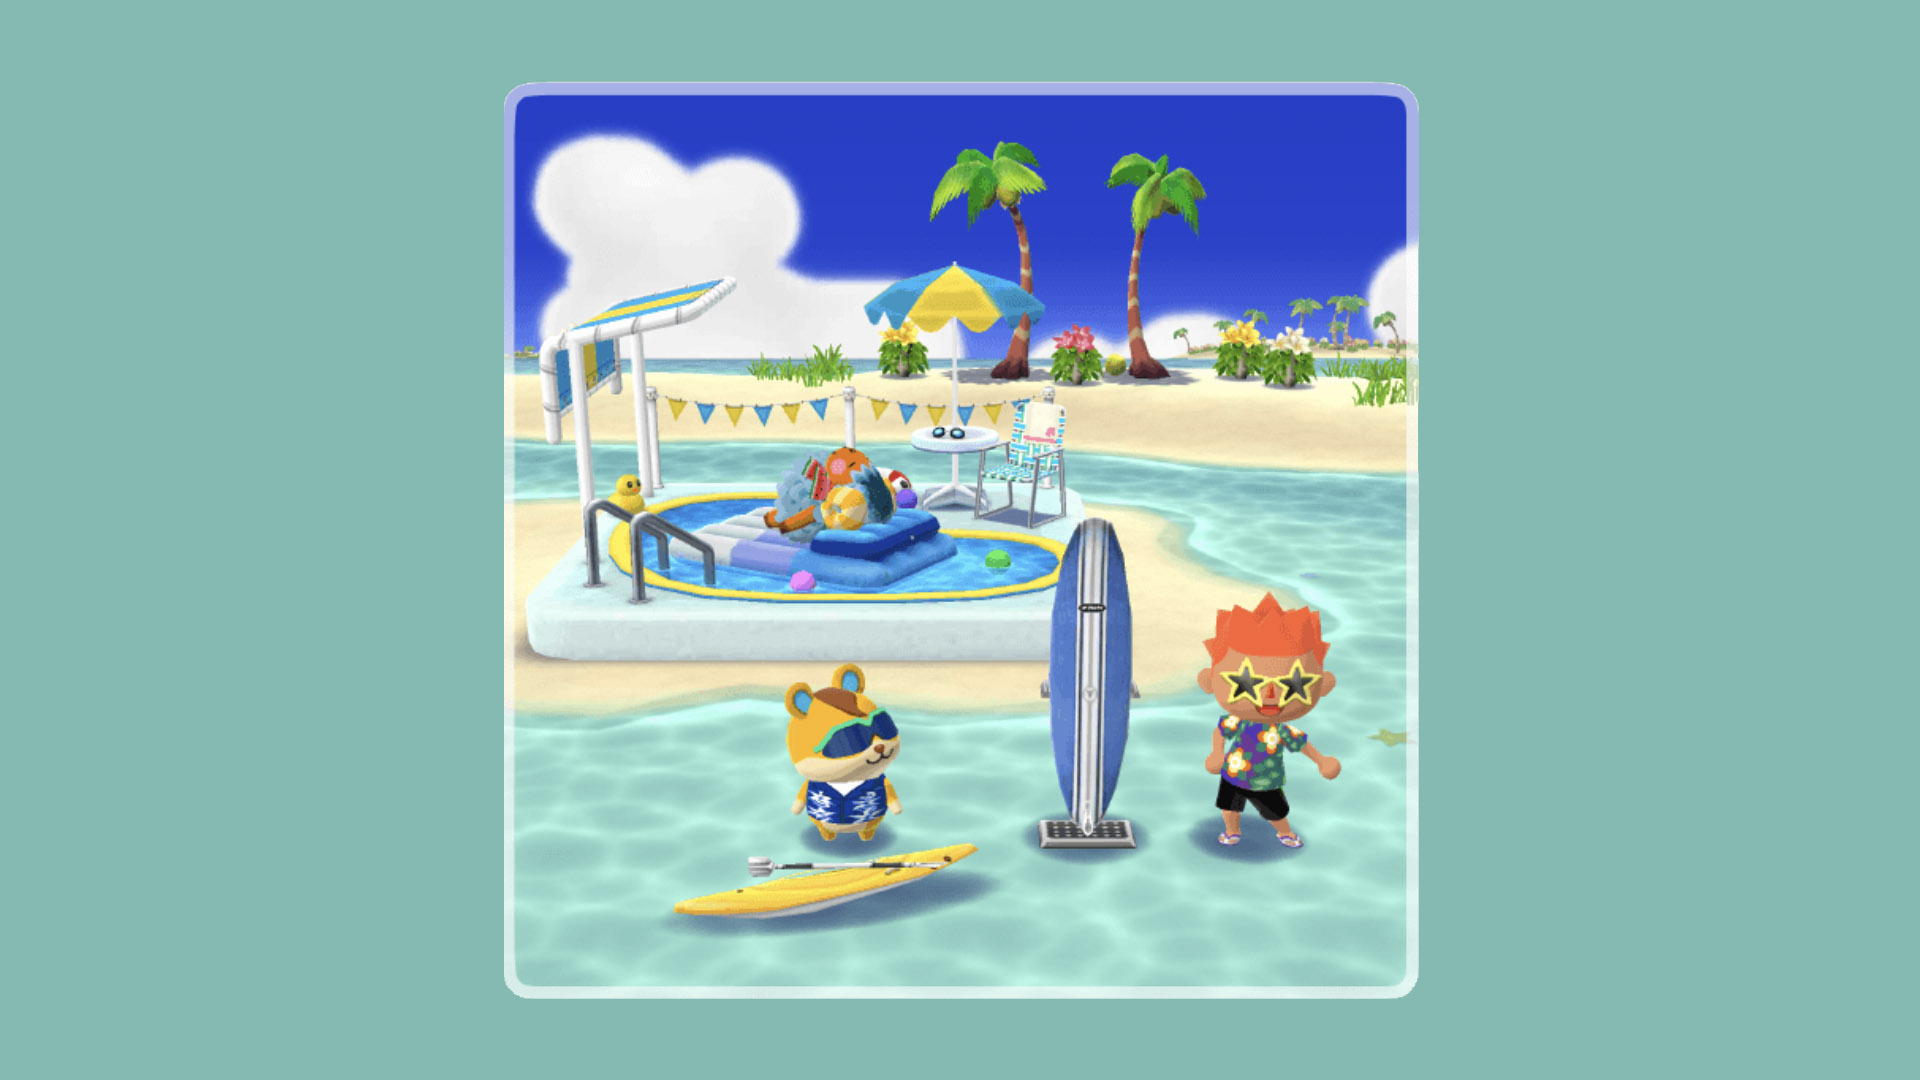 Wii Sports Resort Theme Animal Crossing